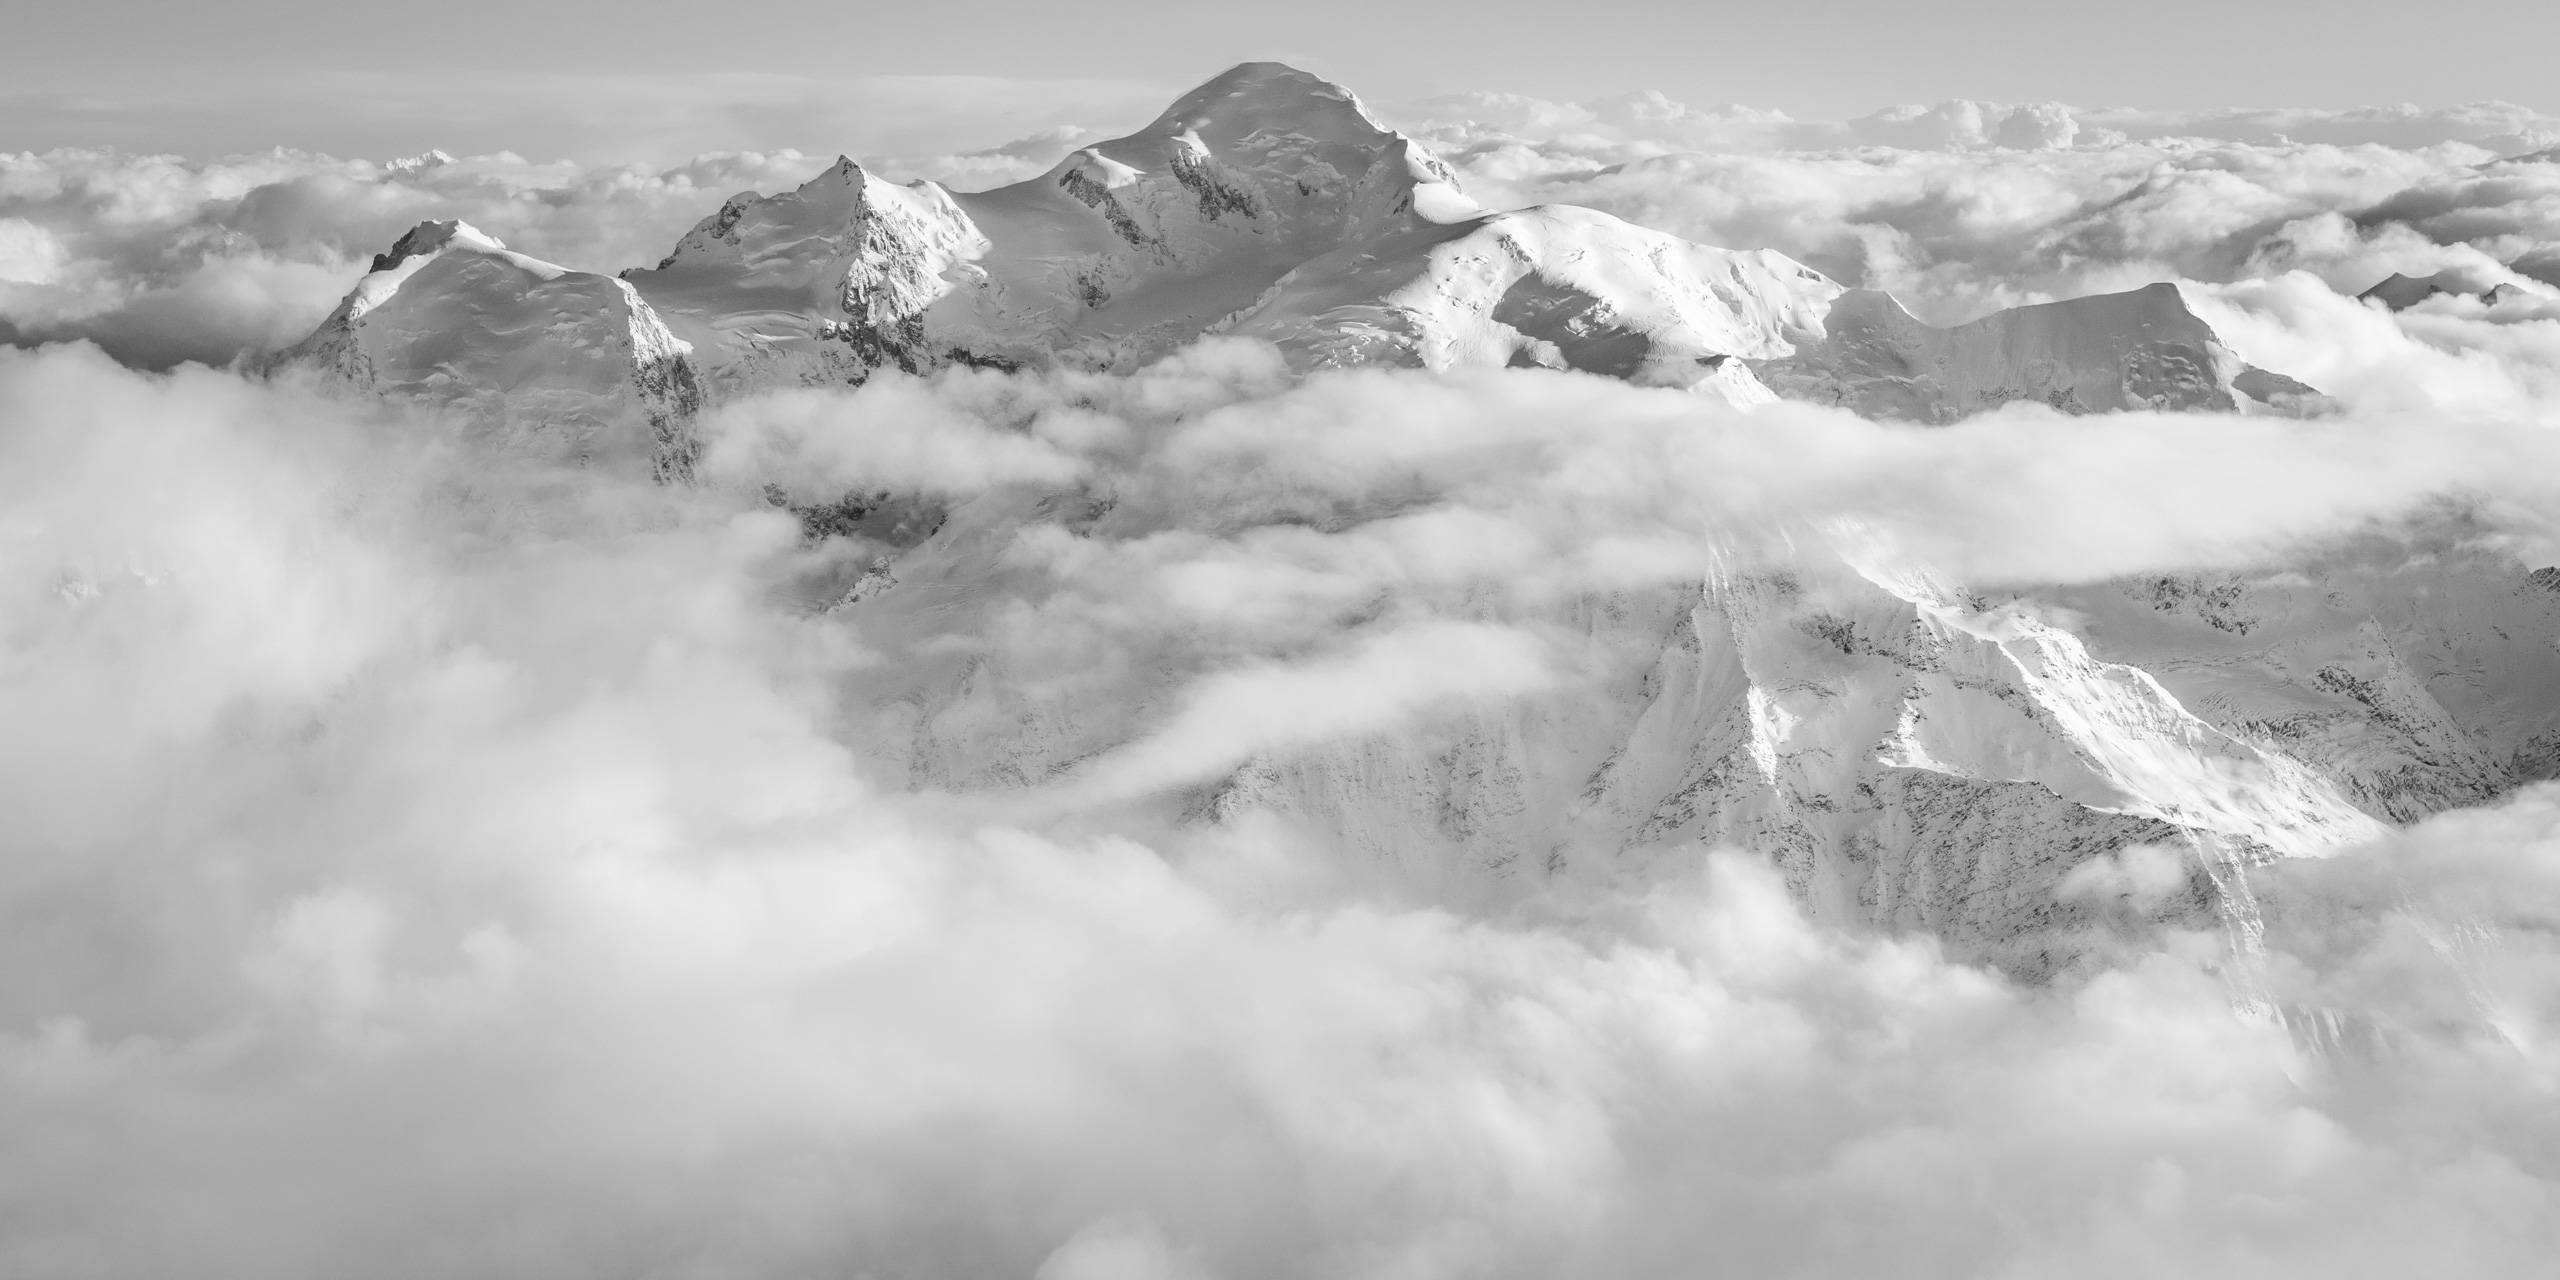 Panorama mont blanc - panorama montagne suisse massif du mont blanc panorama en noir et blanc